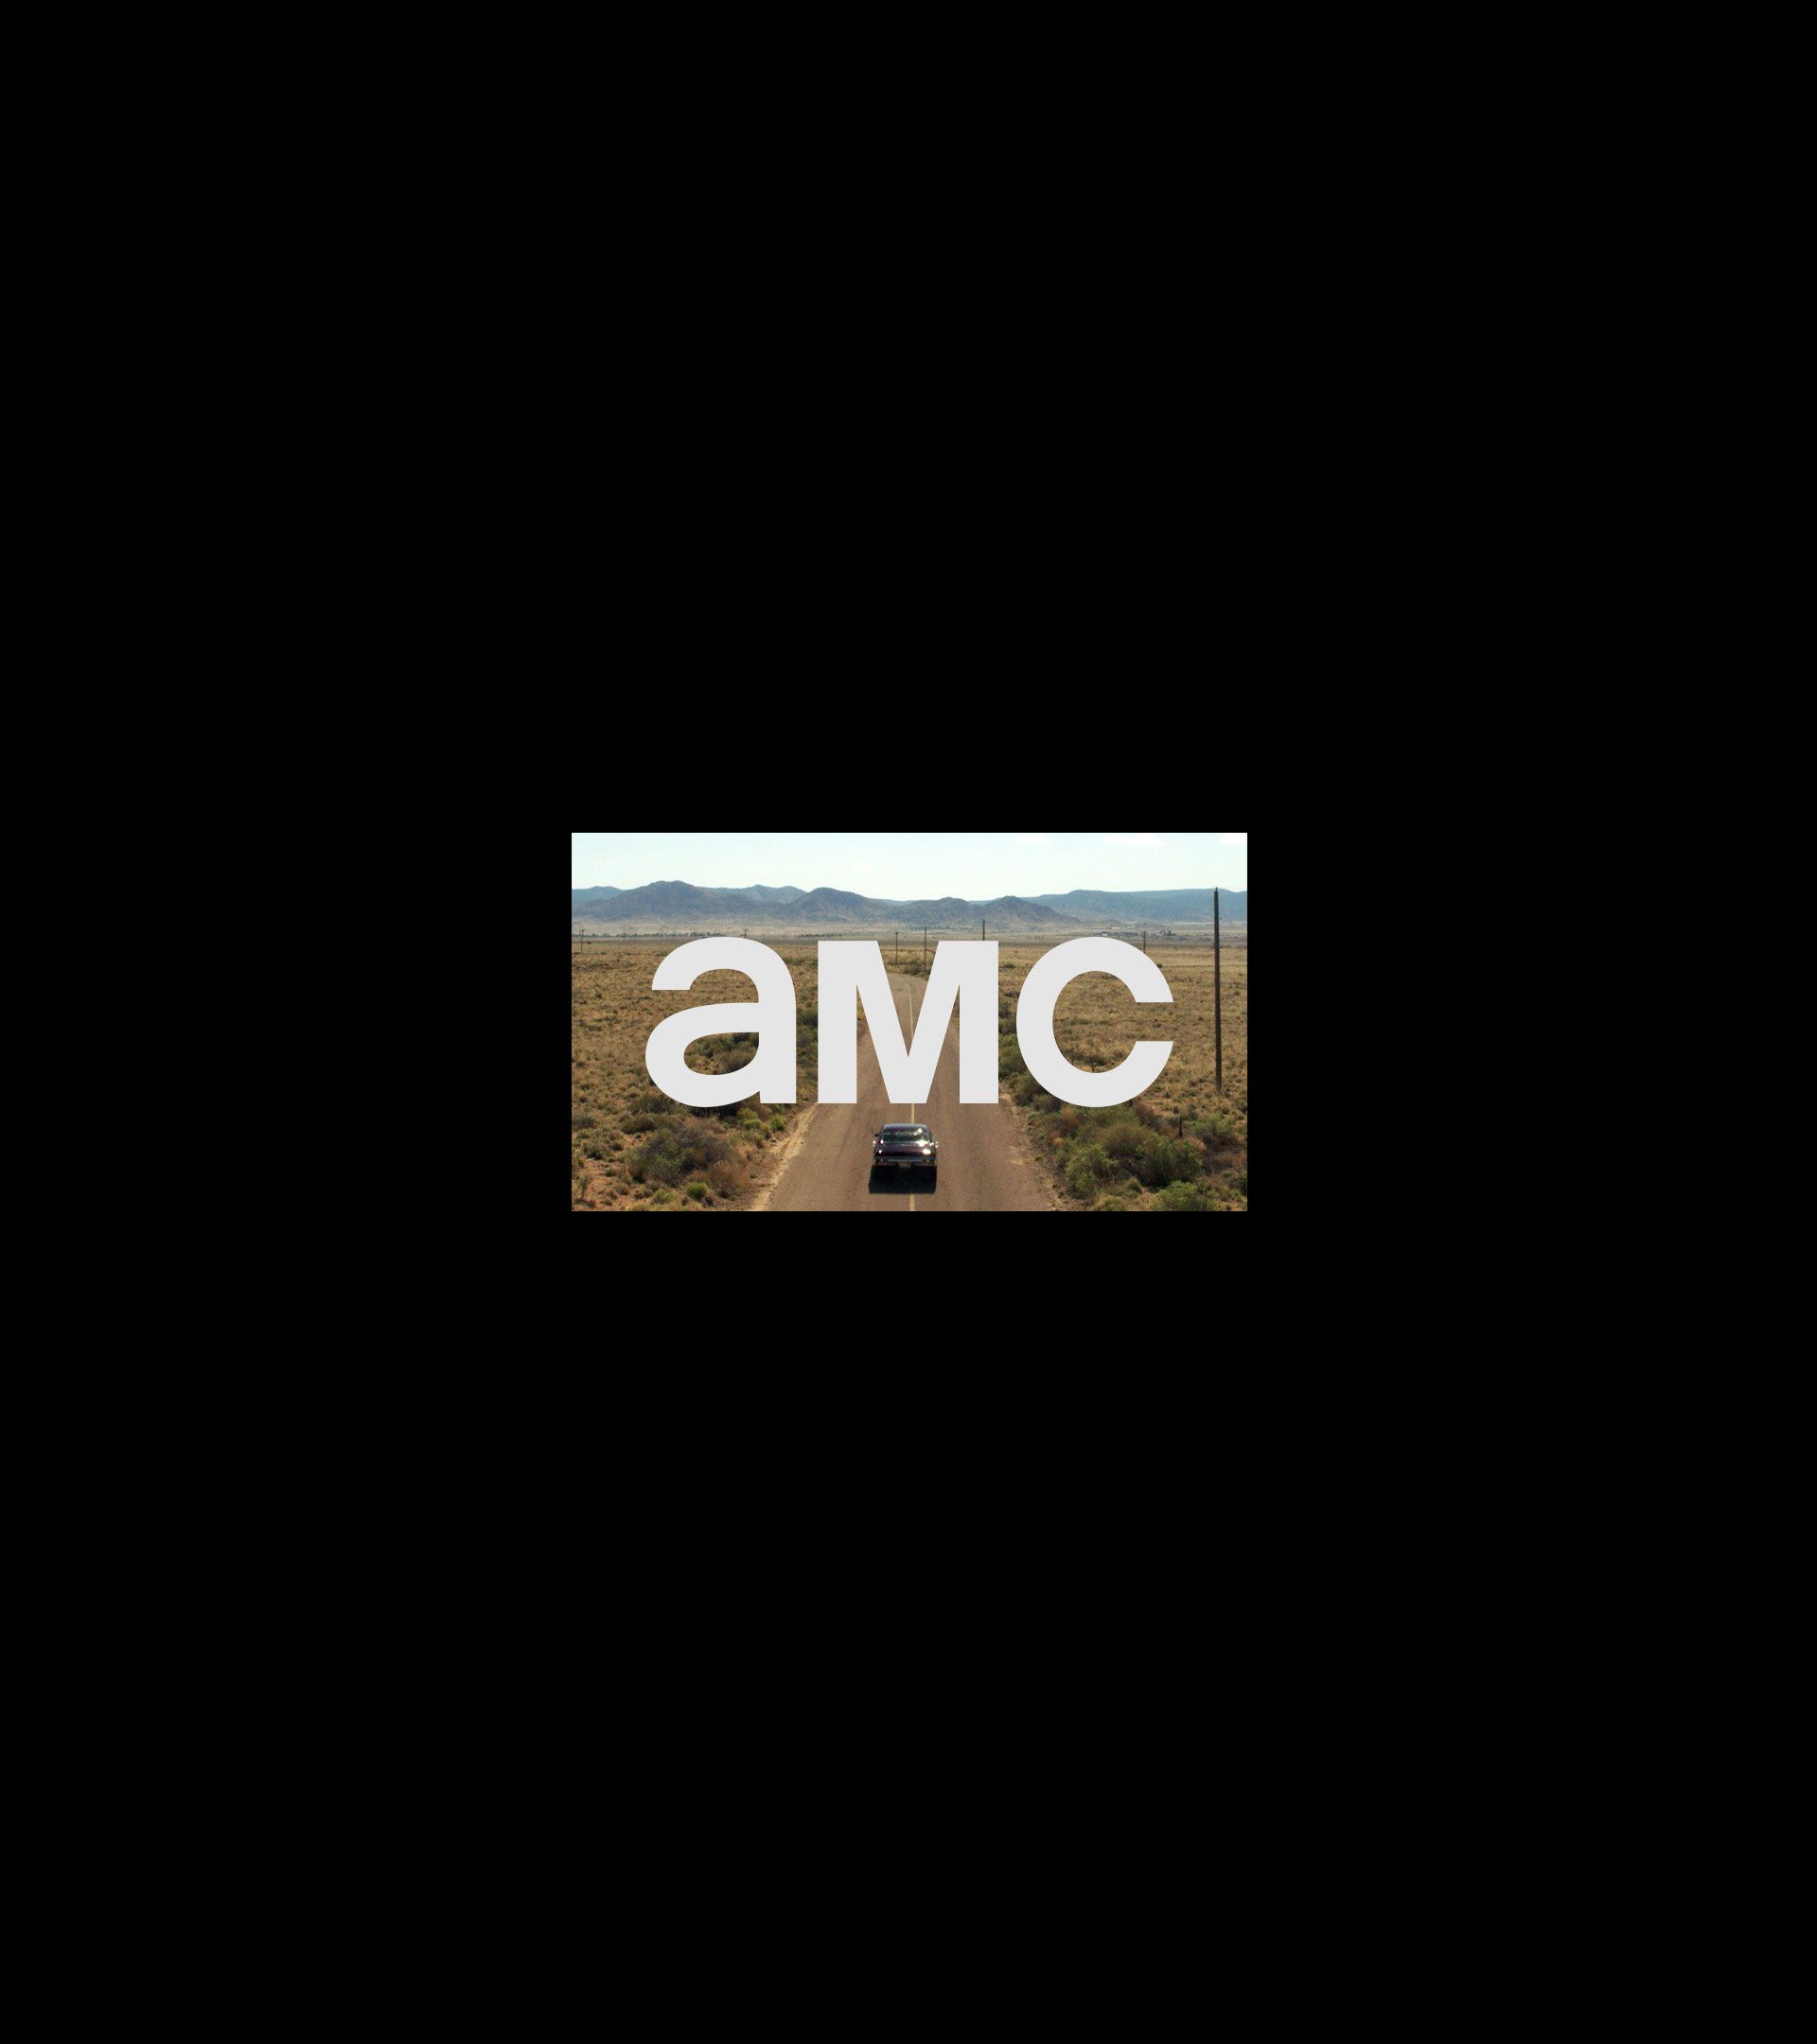 amc channel logo